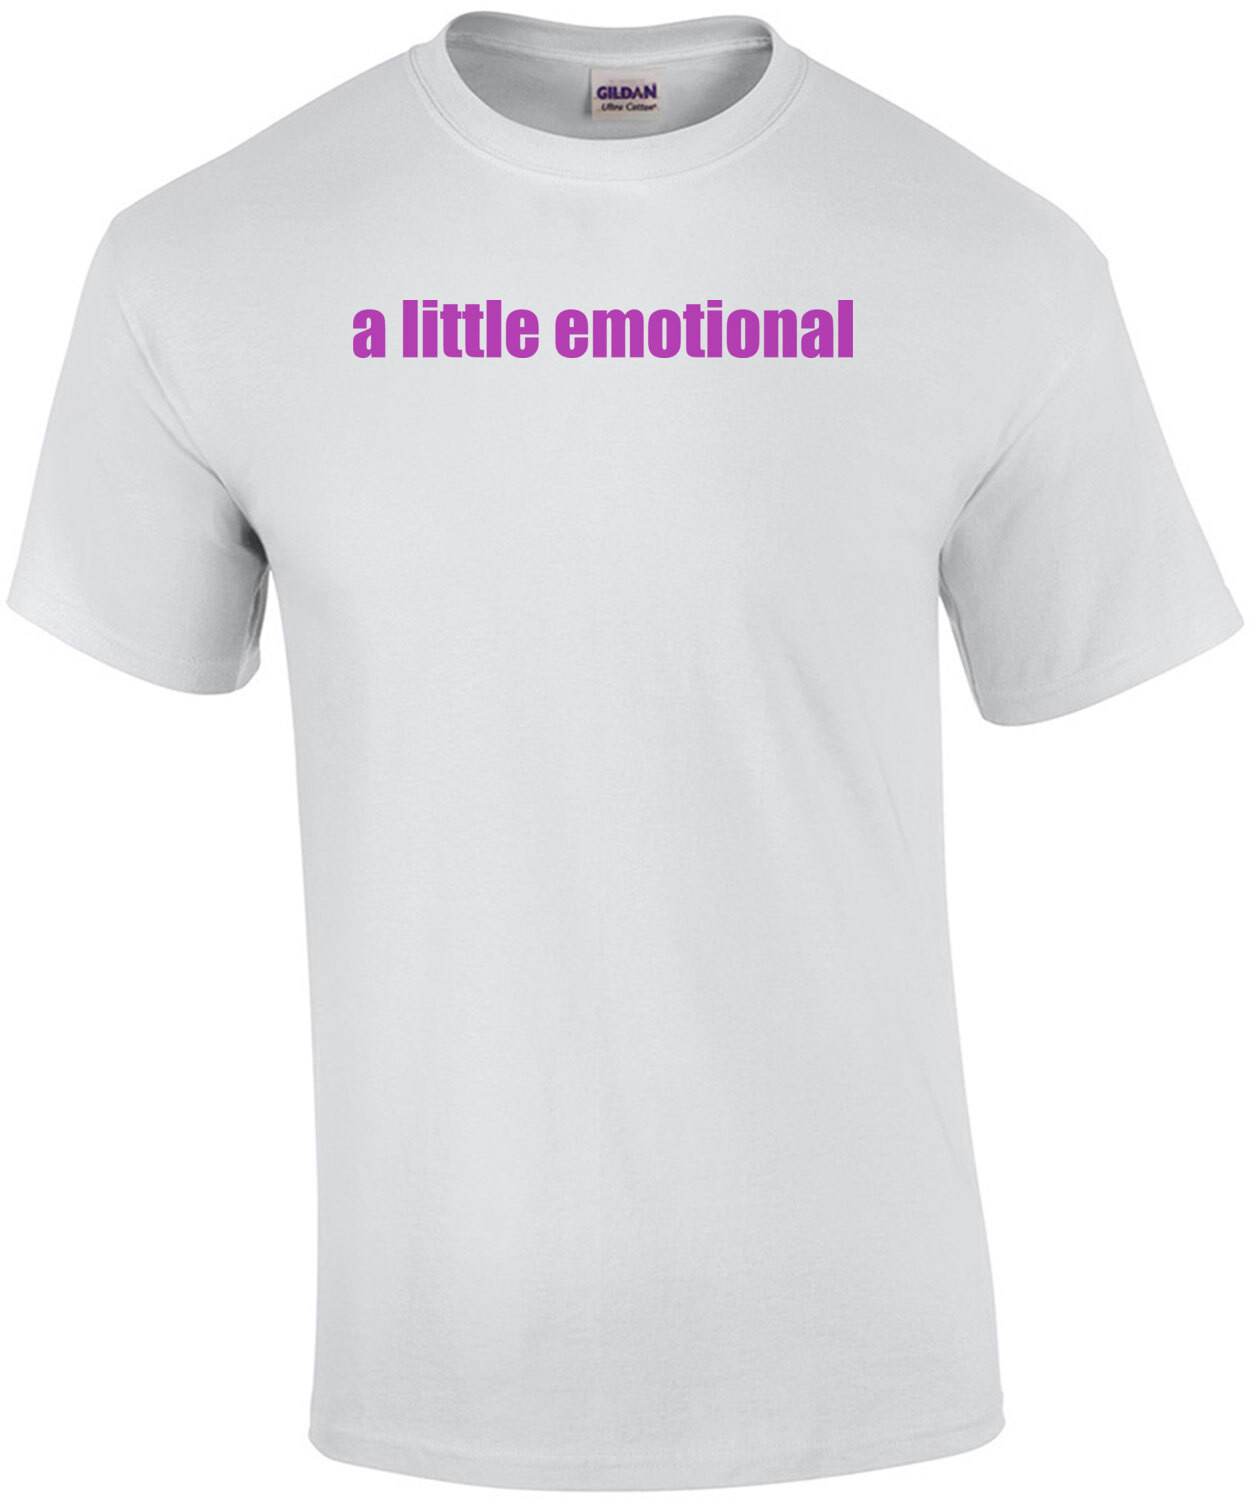 a little emotional - ladies t-shirt